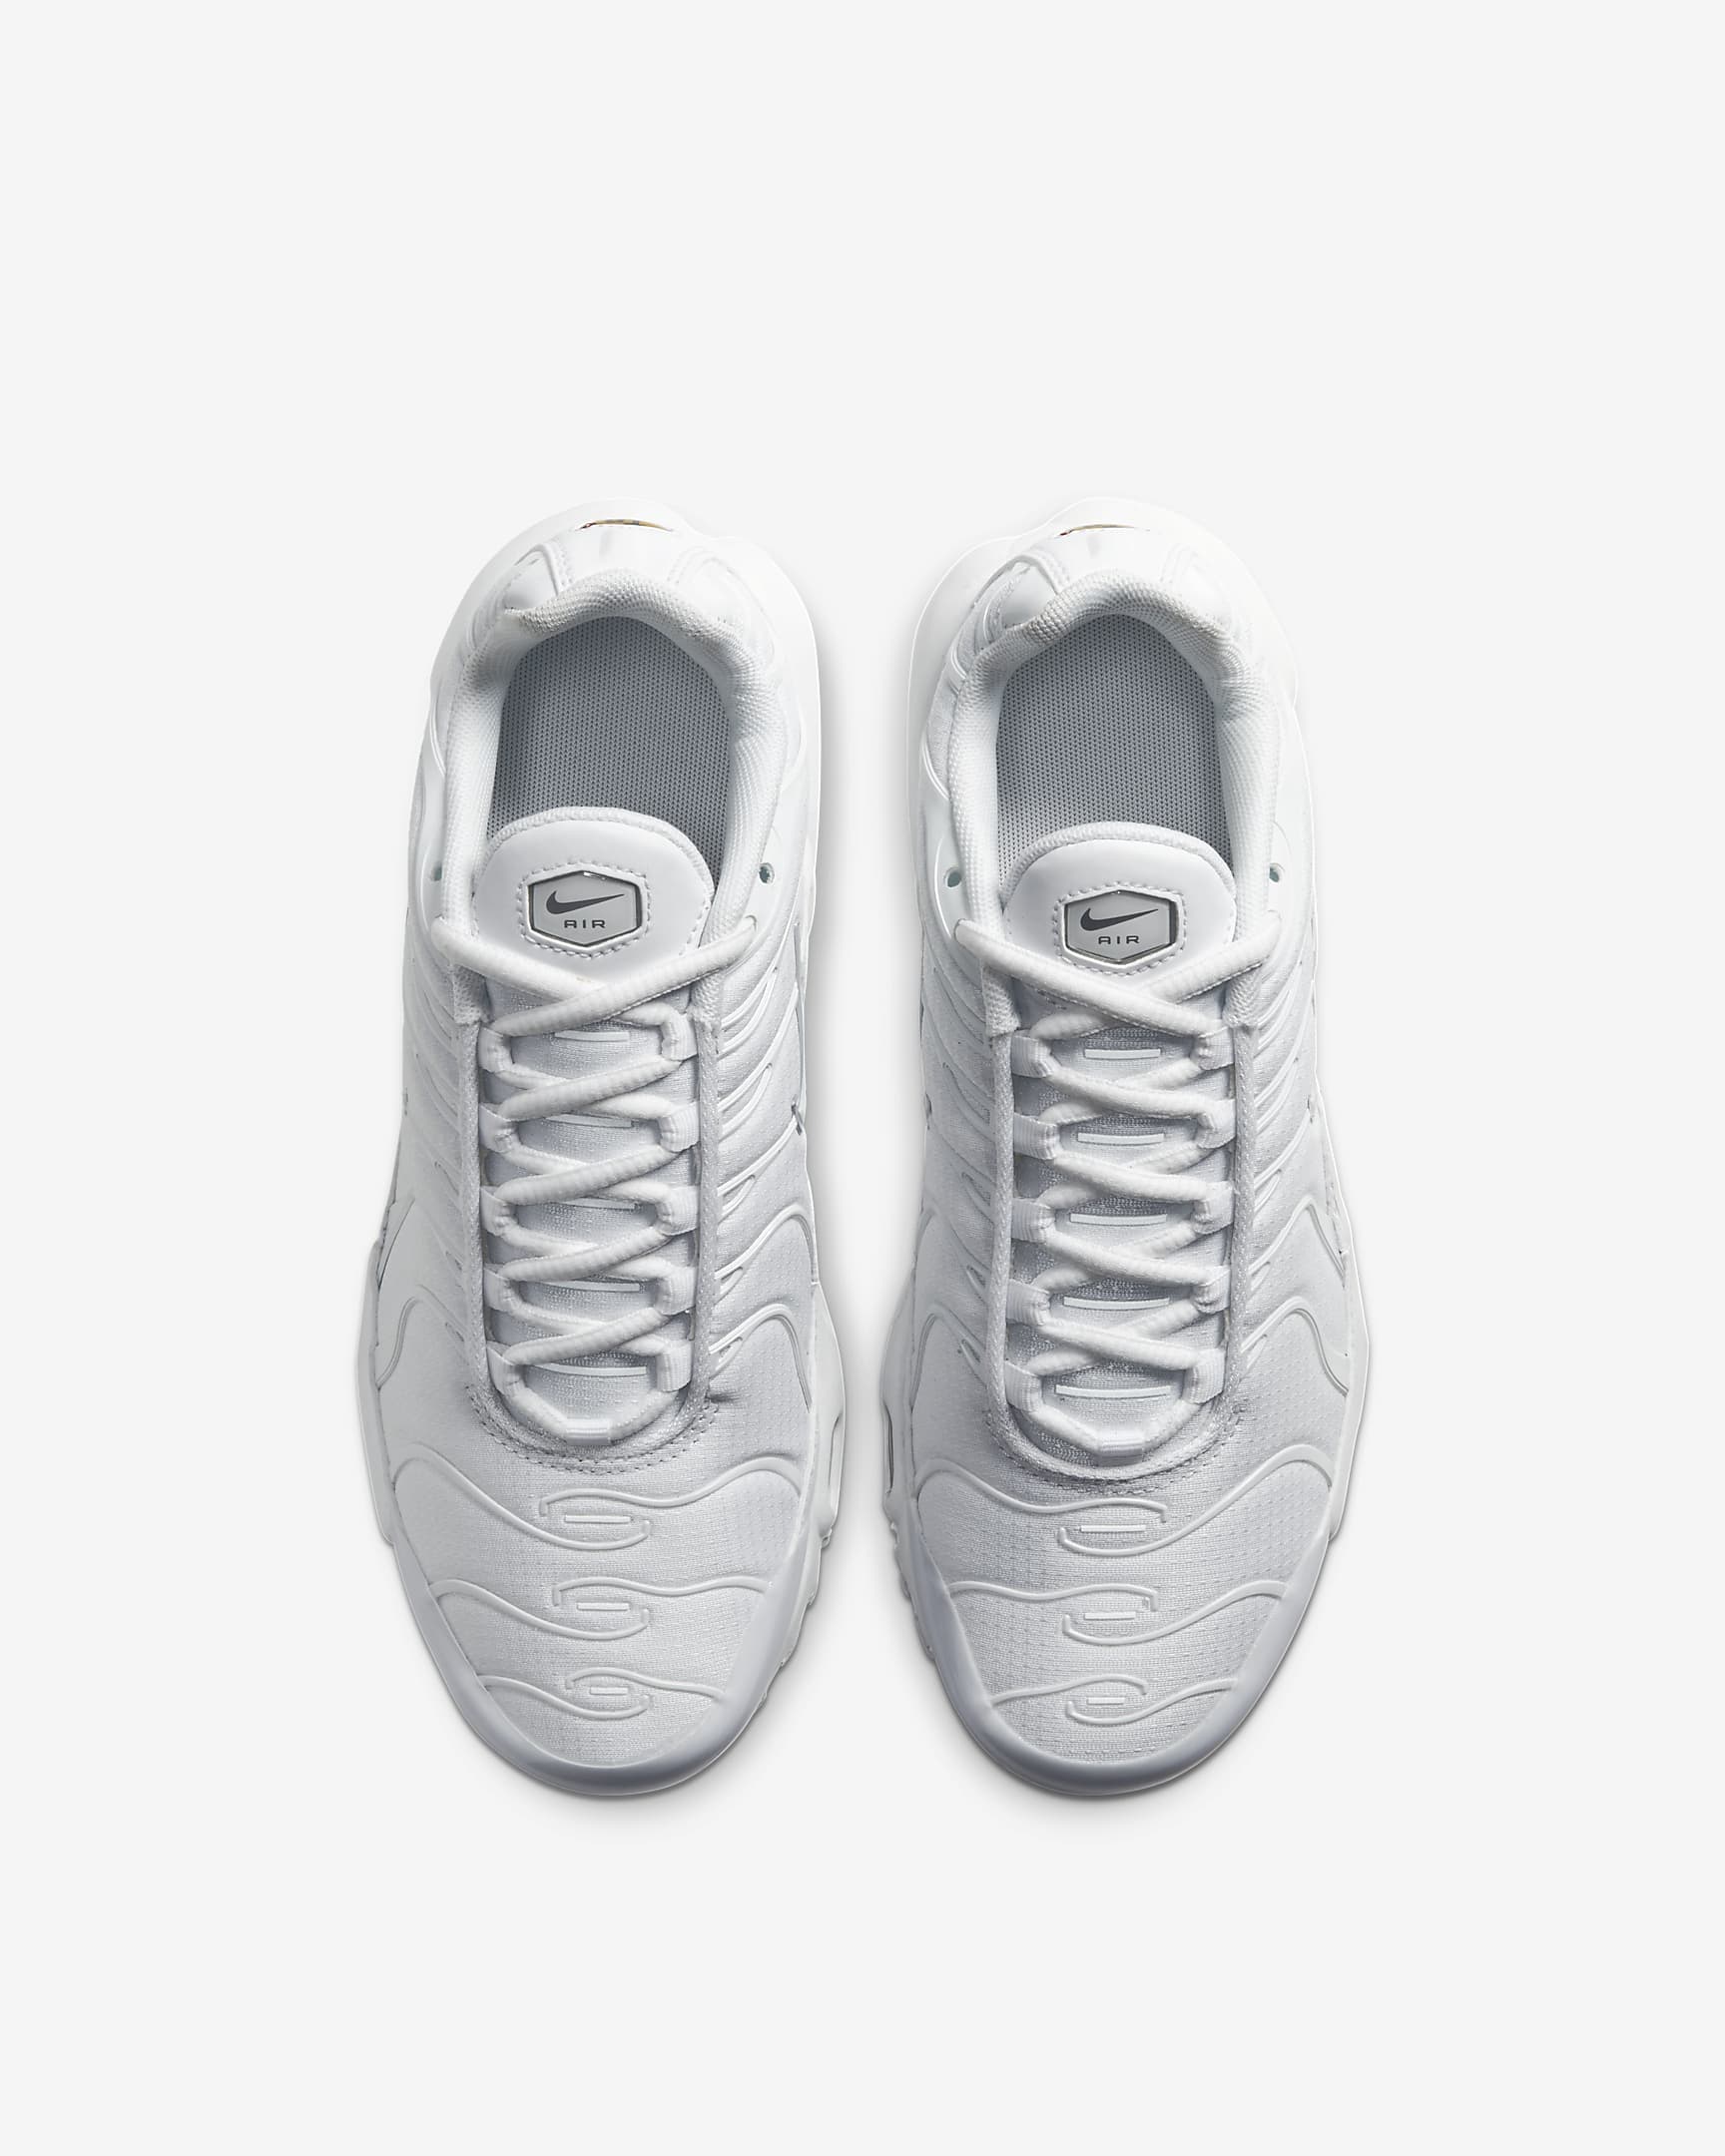 Scarpa Nike Air Max Plus - Ragazzi - Bianco/Argento metallizzato/Bianco